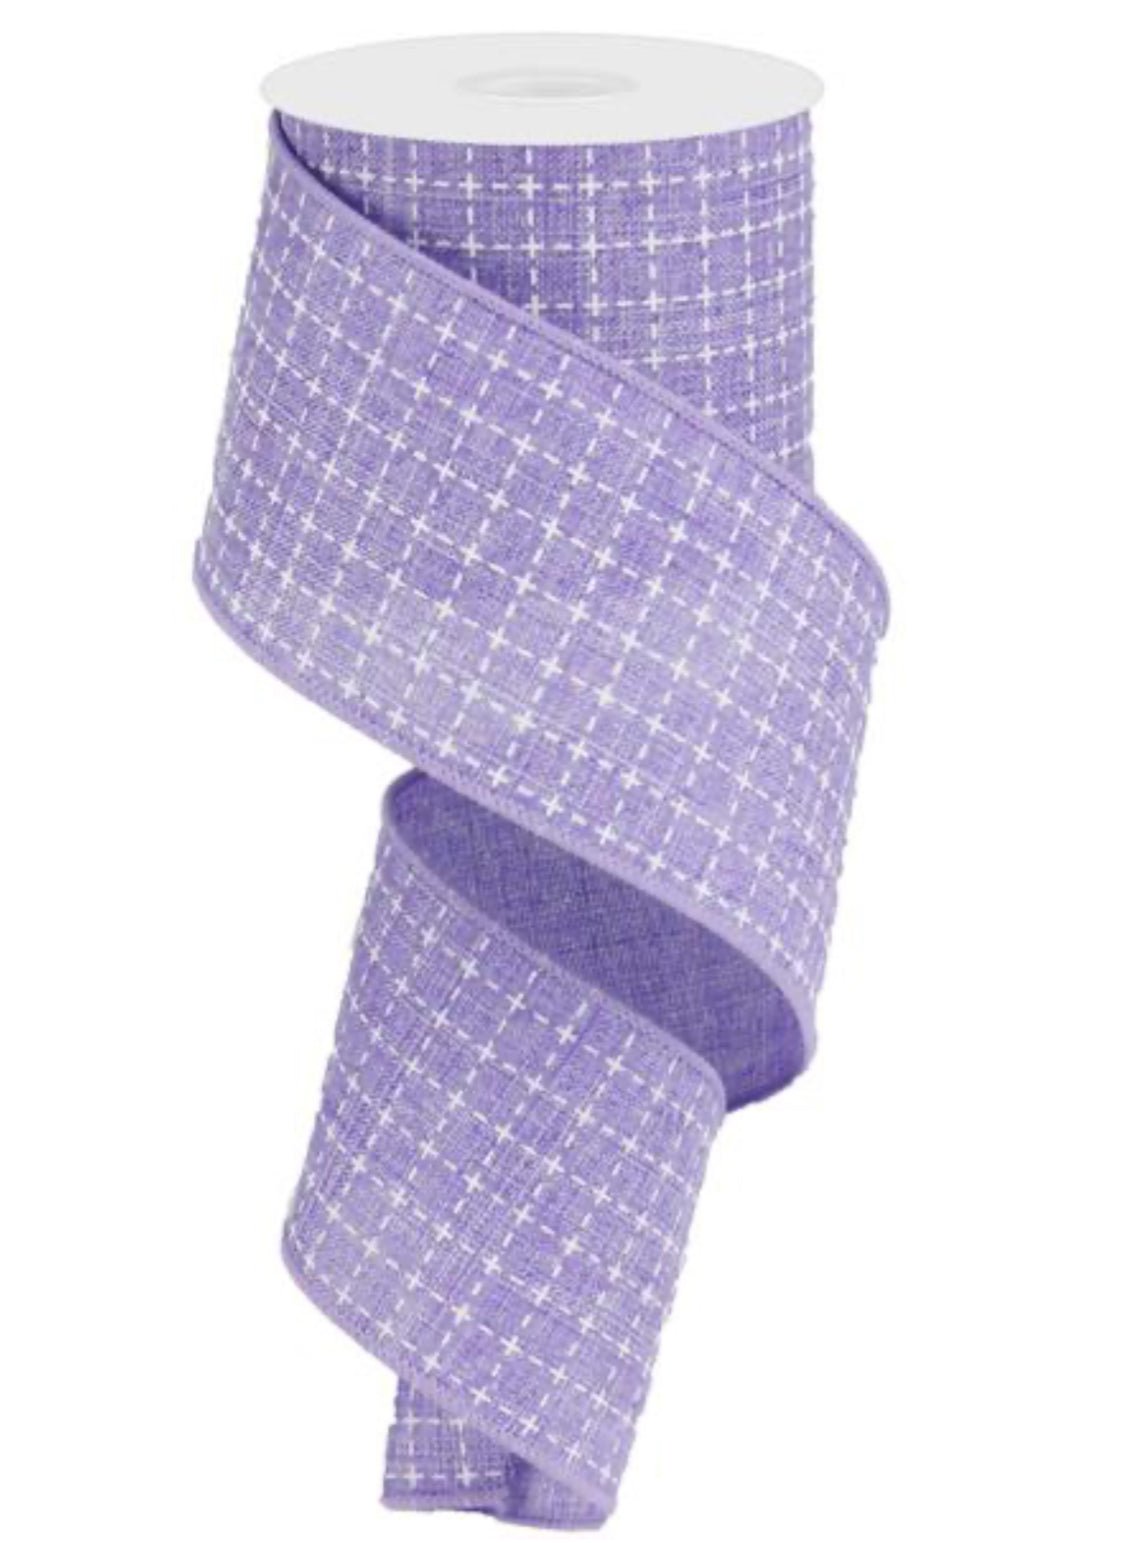 Lavender and white raised stitch plaid 2.5” - Greenery MarketWired ribbonRg0167813